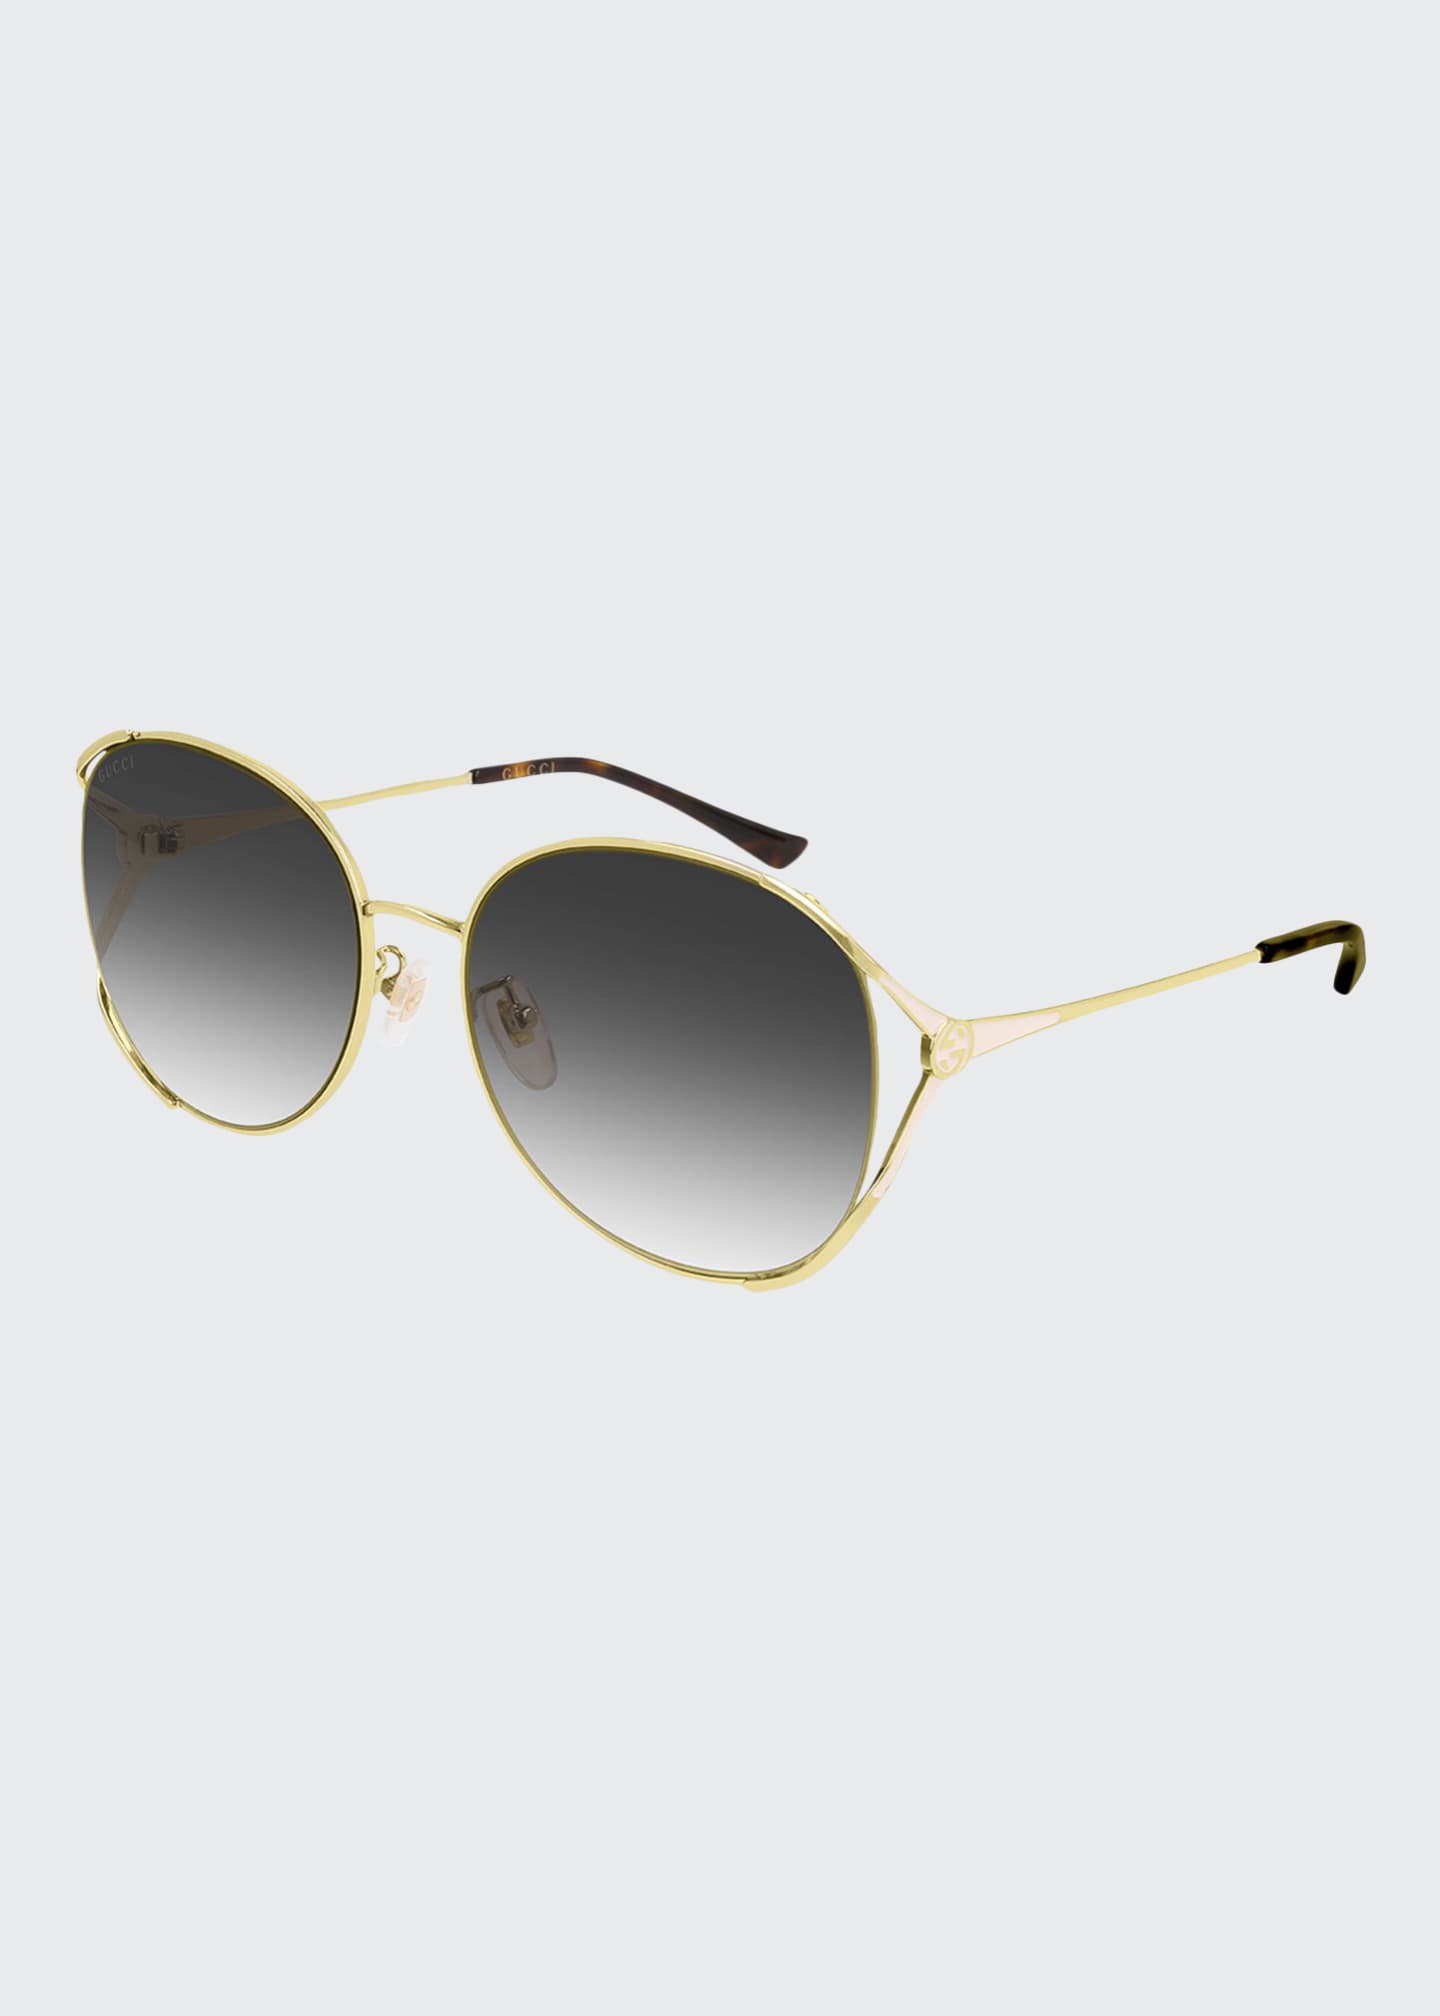 Gucci Round Metal Sunglasses - Bergdorf Goodman